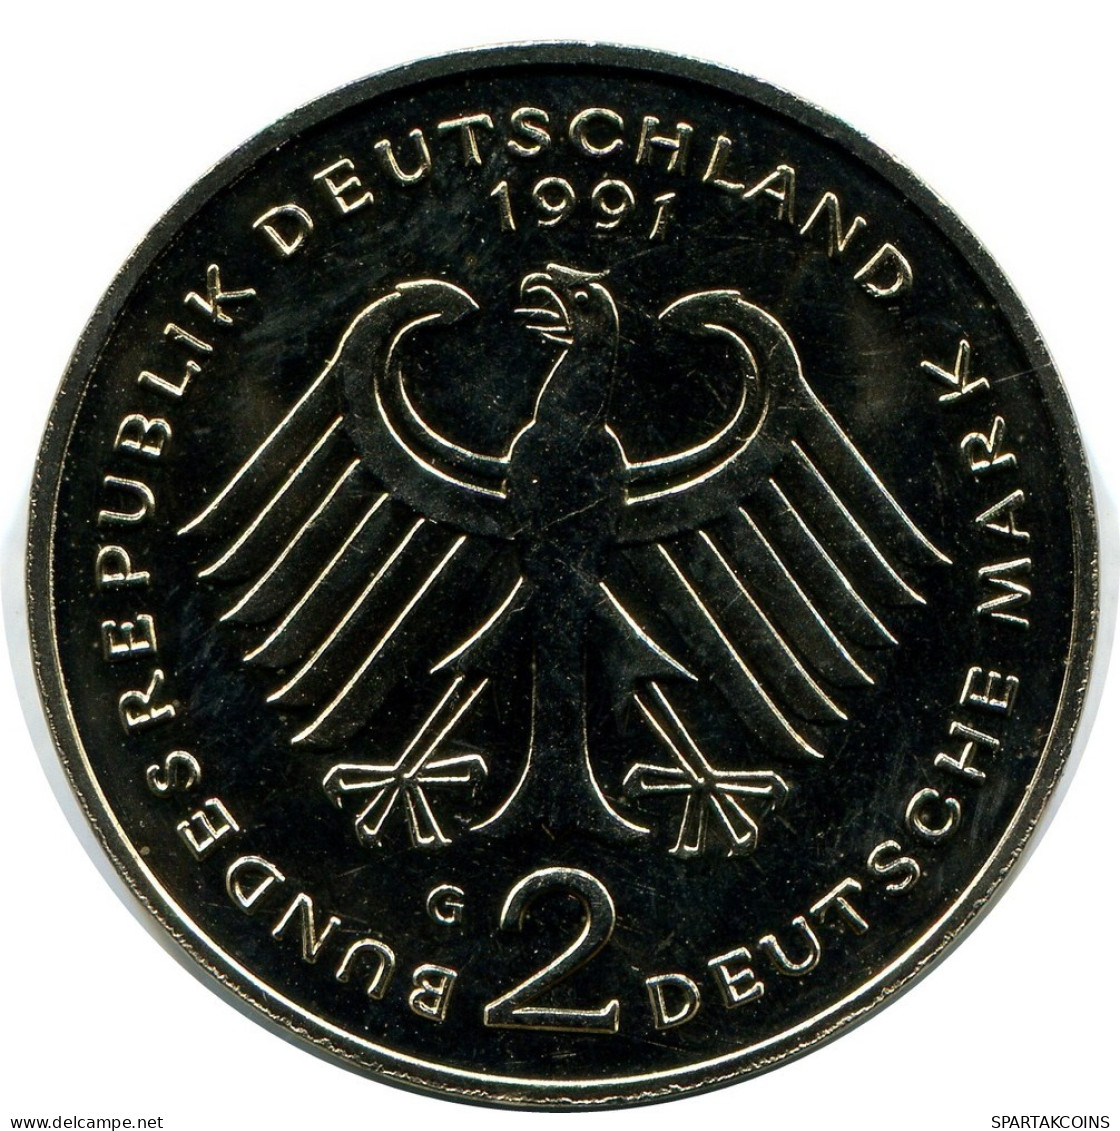 2 DM 1991 G L.ERHARD BRD DEUTSCHLAND Münze GERMANY #AZ437.D.A - 2 Mark